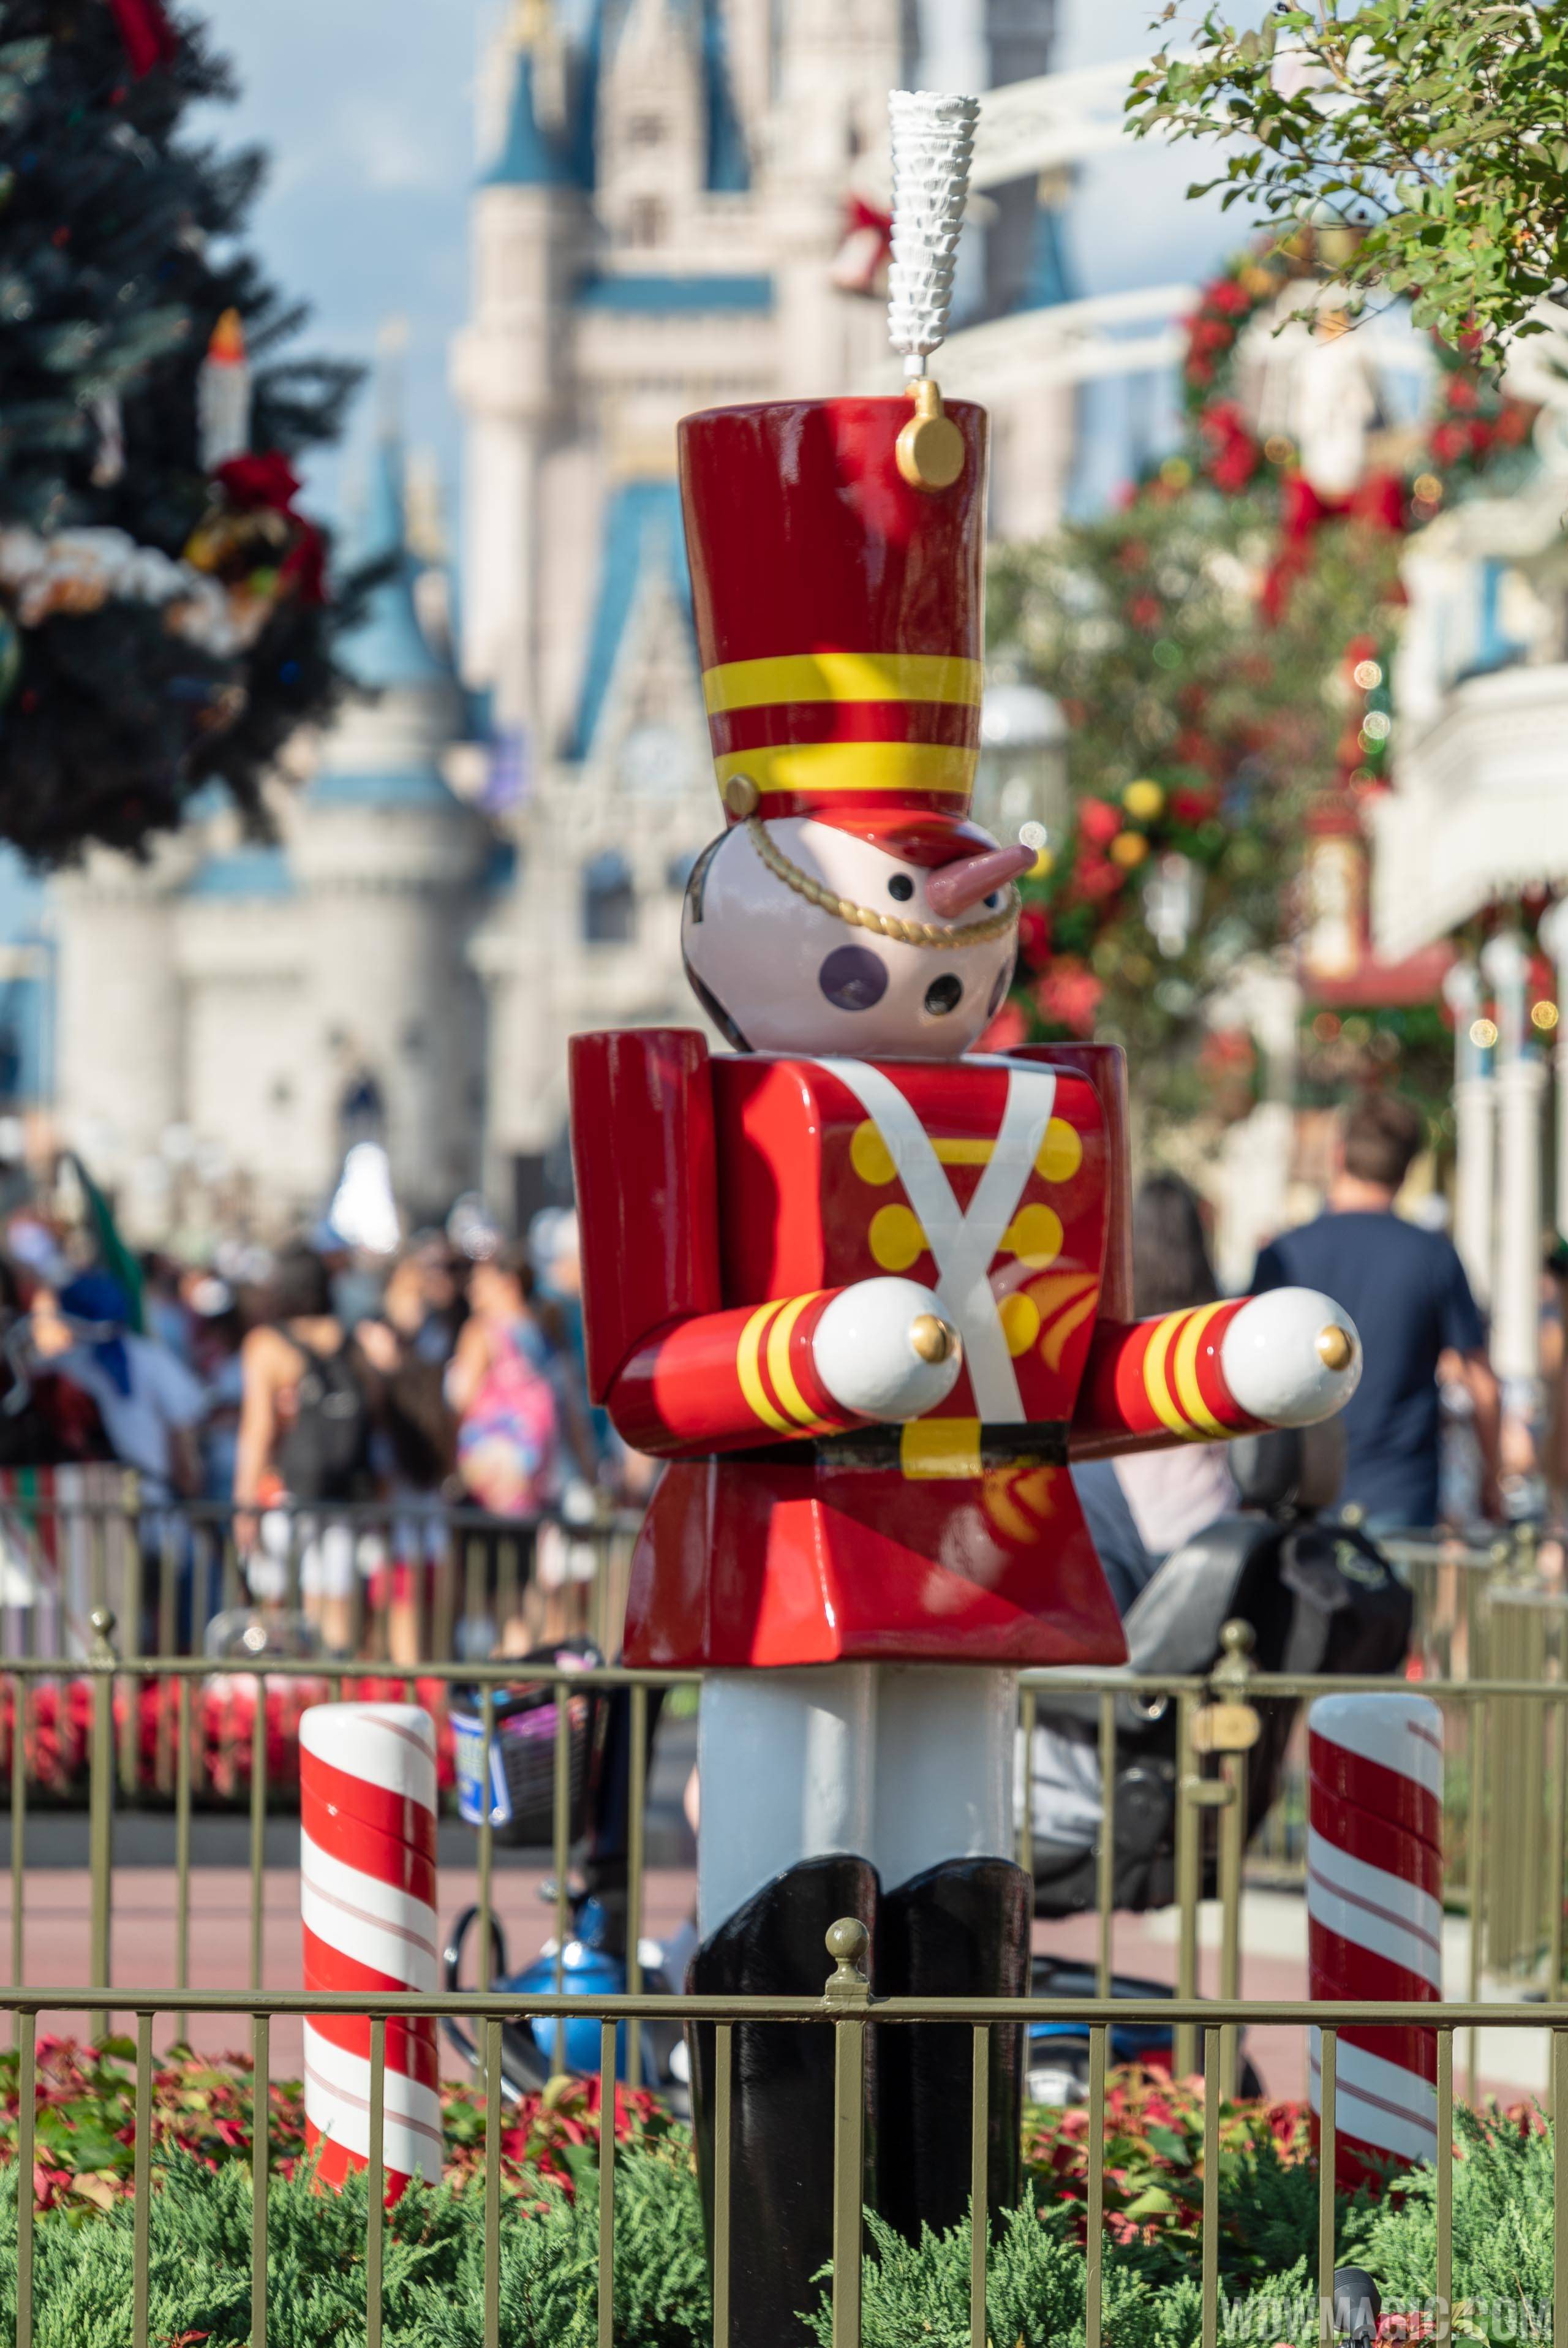 Christmas Holidays decorations at the Magic Kingdom 2018